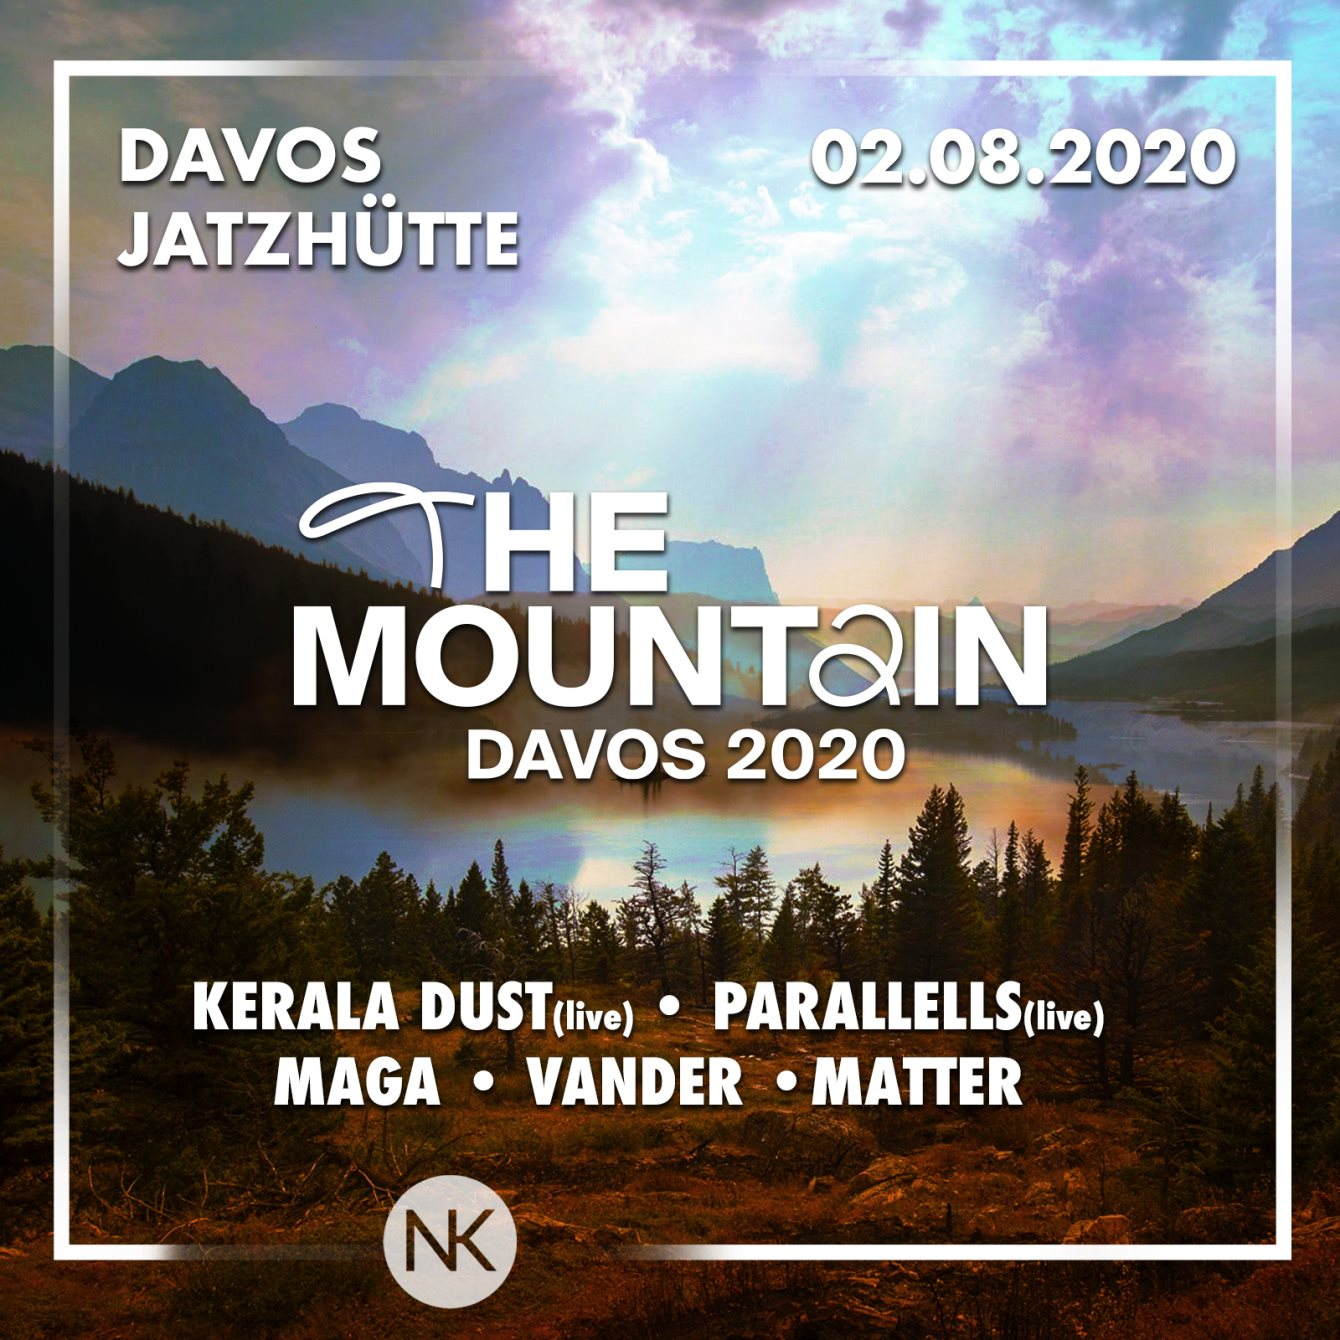 The Mountain Festival Day 20 at Jatzhuette, Switzerland